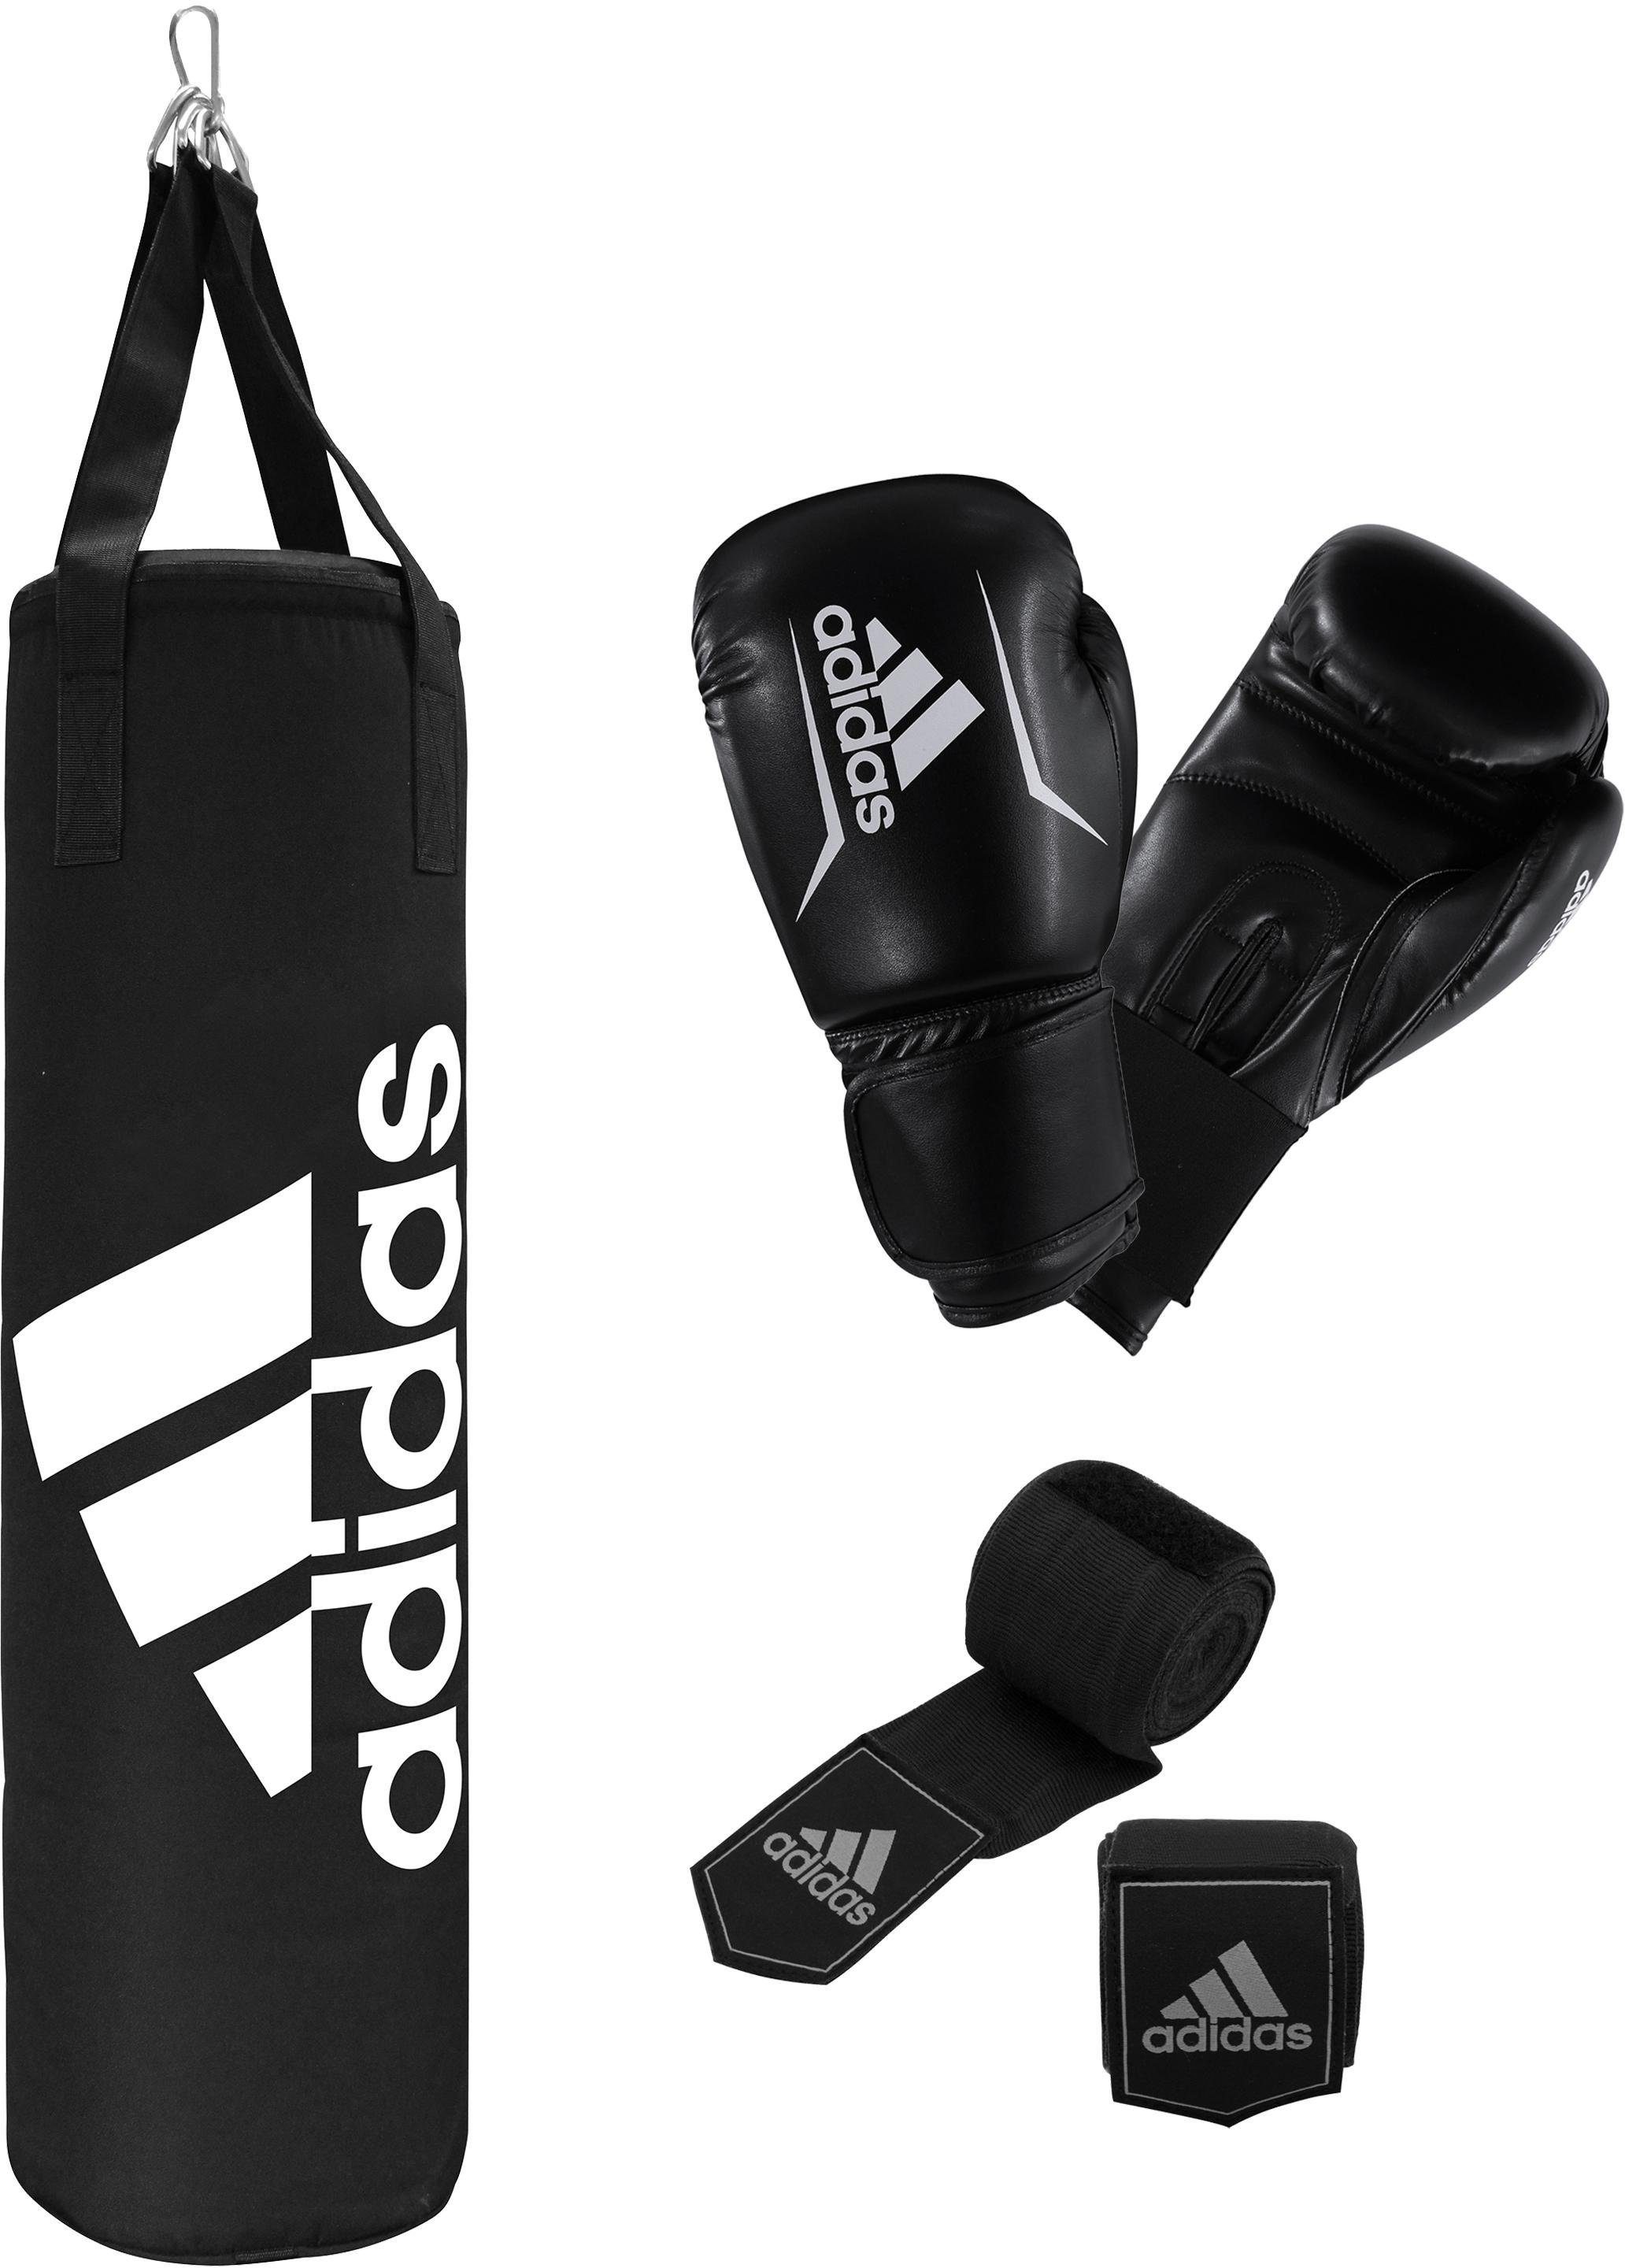 adidas Performance Boxsack mit mit Boxhandschuhen) Bandagen, Performance (Set, Set Boxing